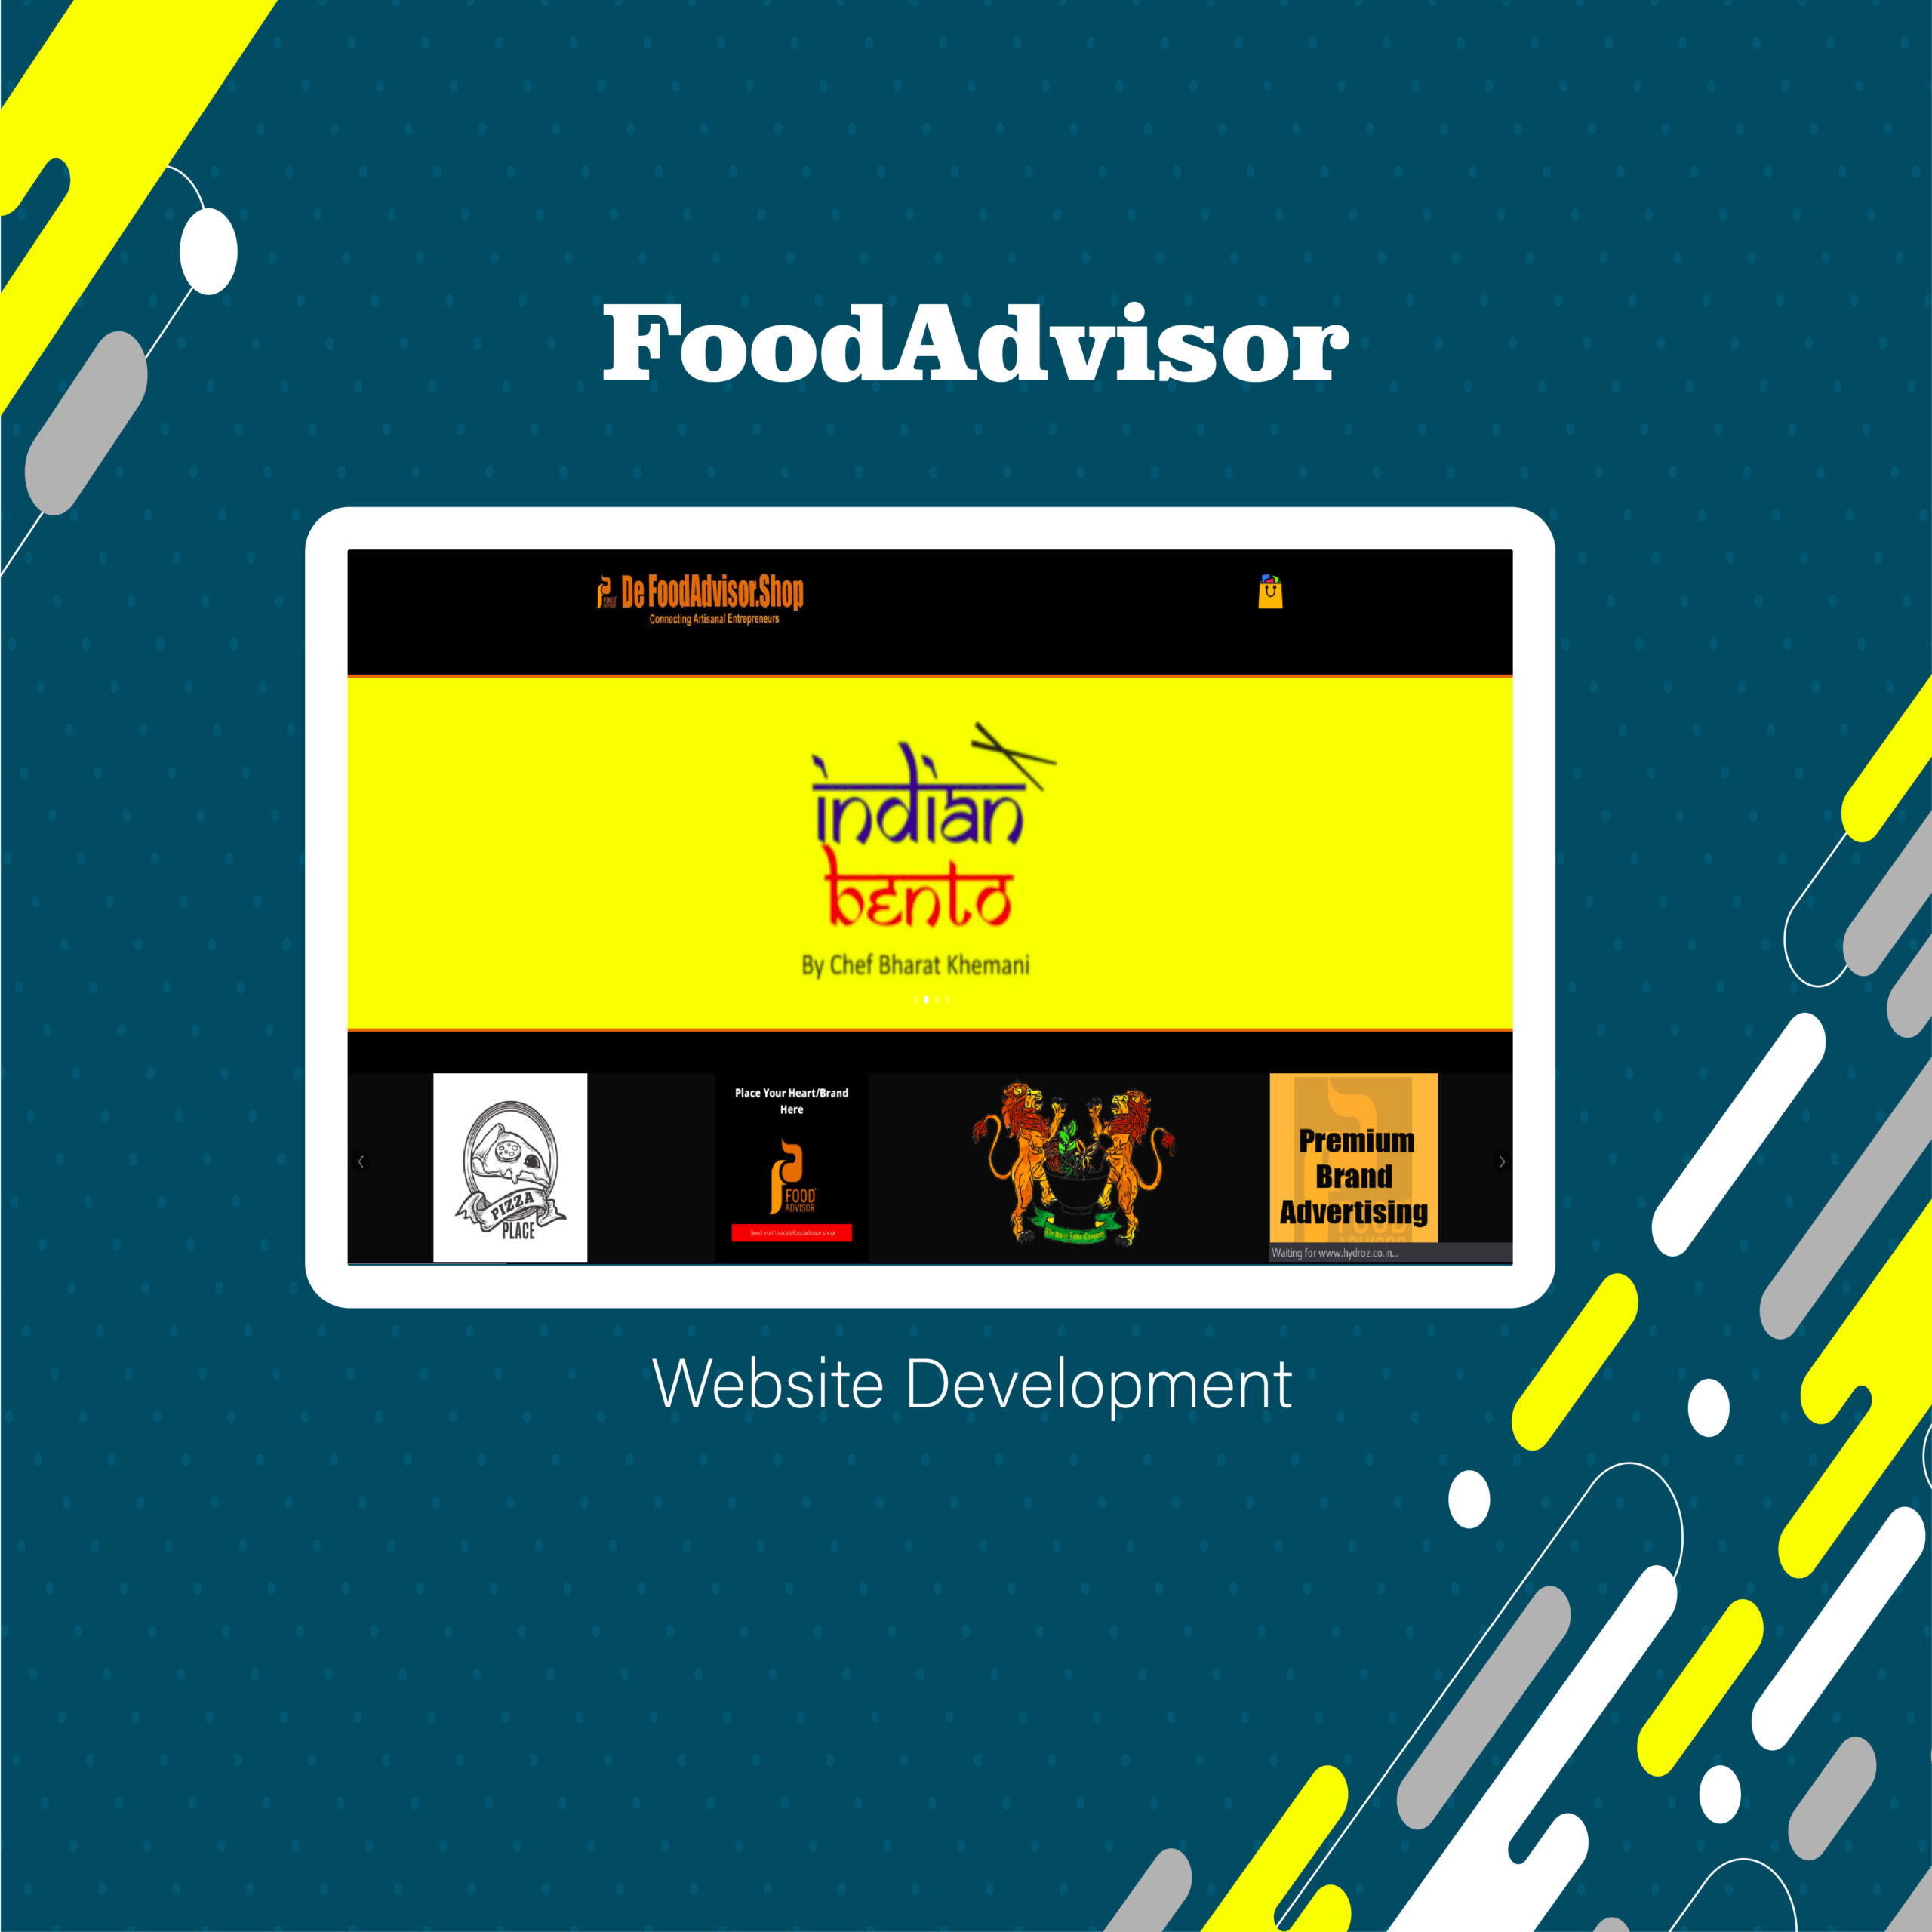 FoodAdvisor